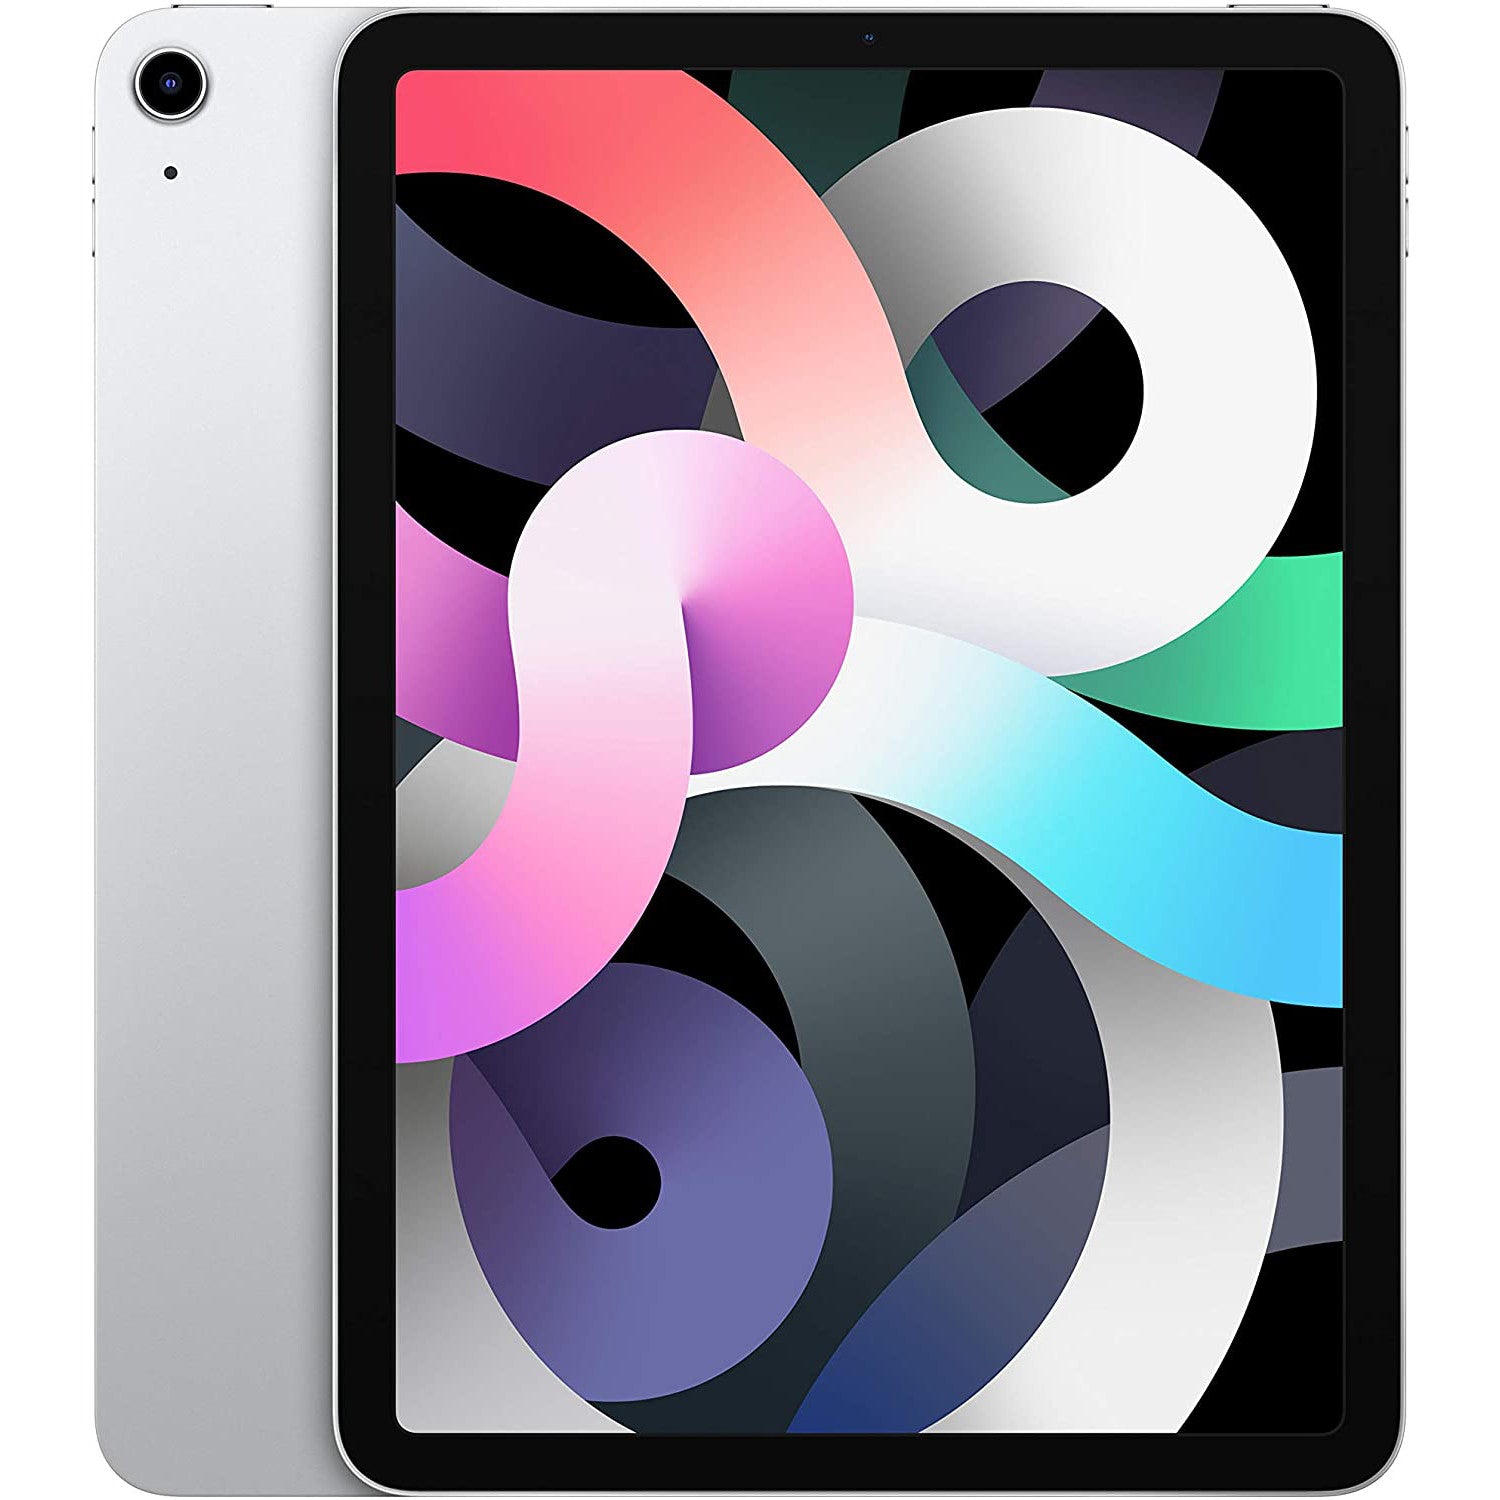 iPad Air 4 256GB WiFi - Silber - Makellos